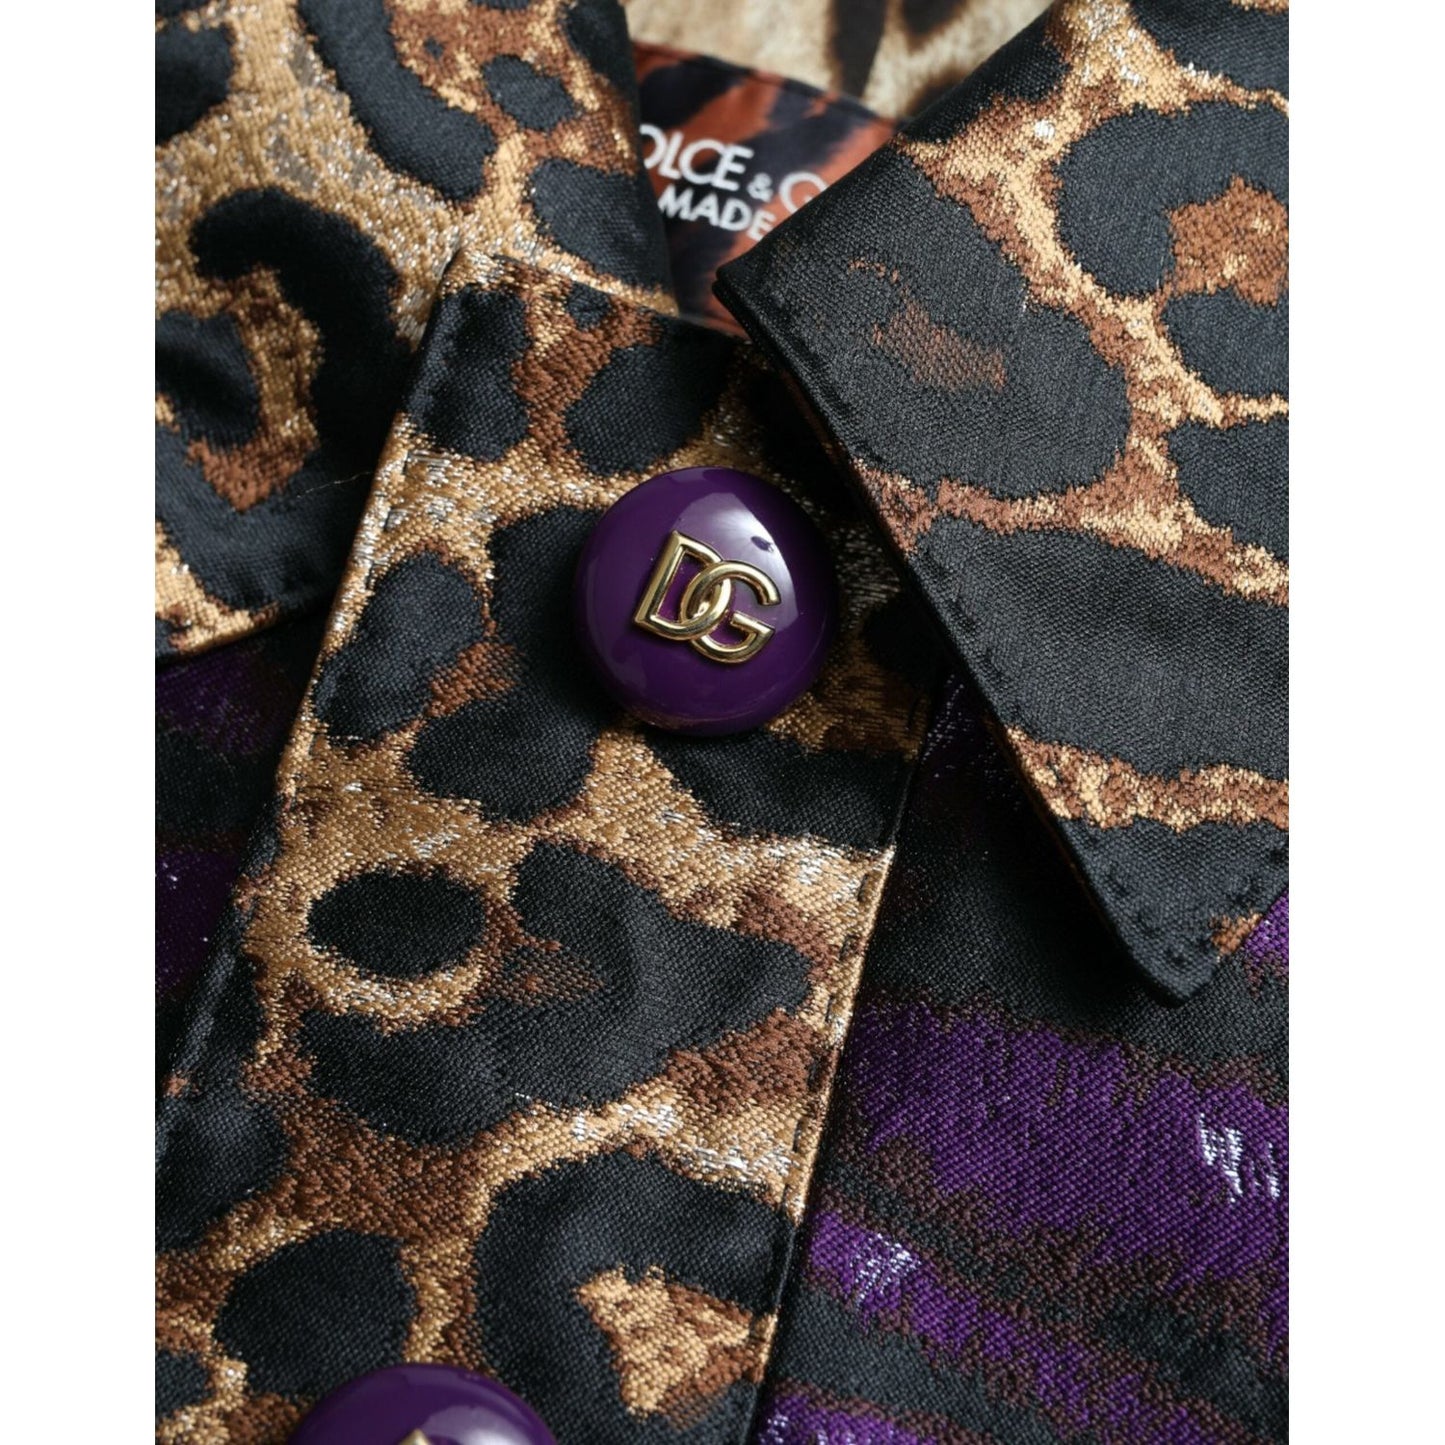 Dolce & Gabbana Exquisite Jacquard Trench With Tiger Motif purple-lame-jacquard-tiger-print-coat-jacket 465A9003-BG-scaled-300e2b8b-fa0.jpg